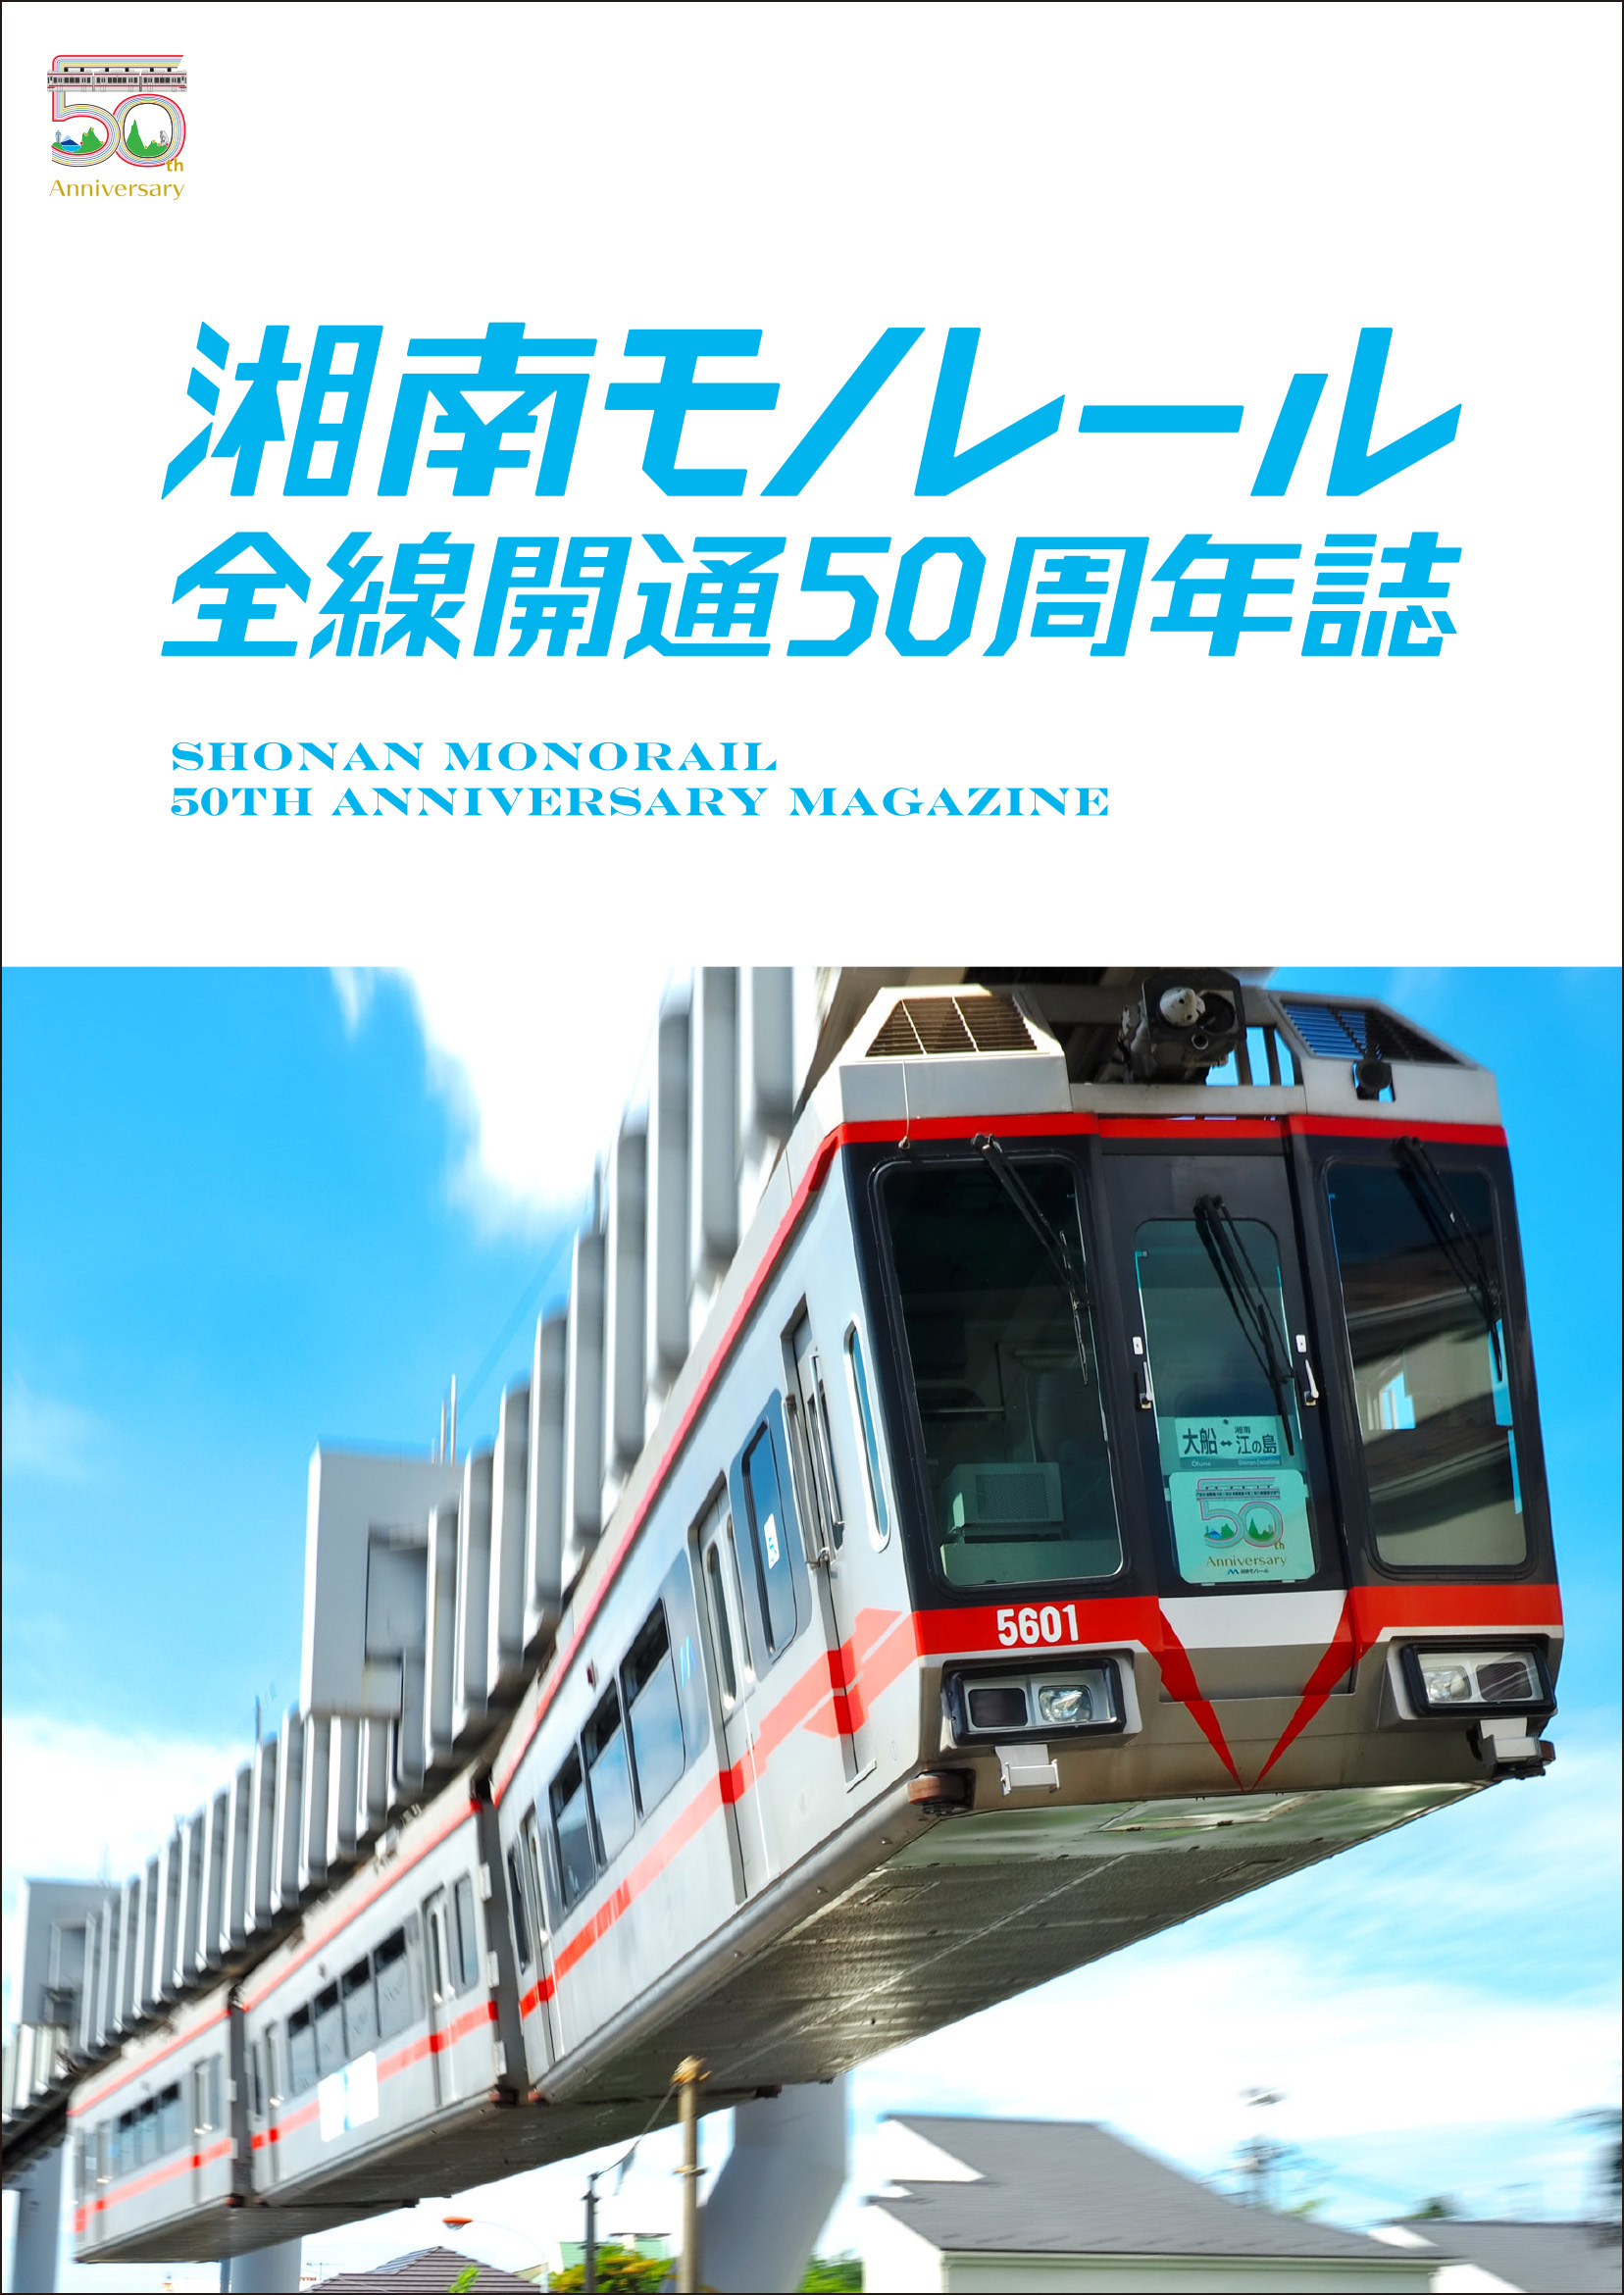 https://www.shonan-monorail.co.jp/news/upload/232055b9c714339f2918f8bf437035cc826a89f6.jpg